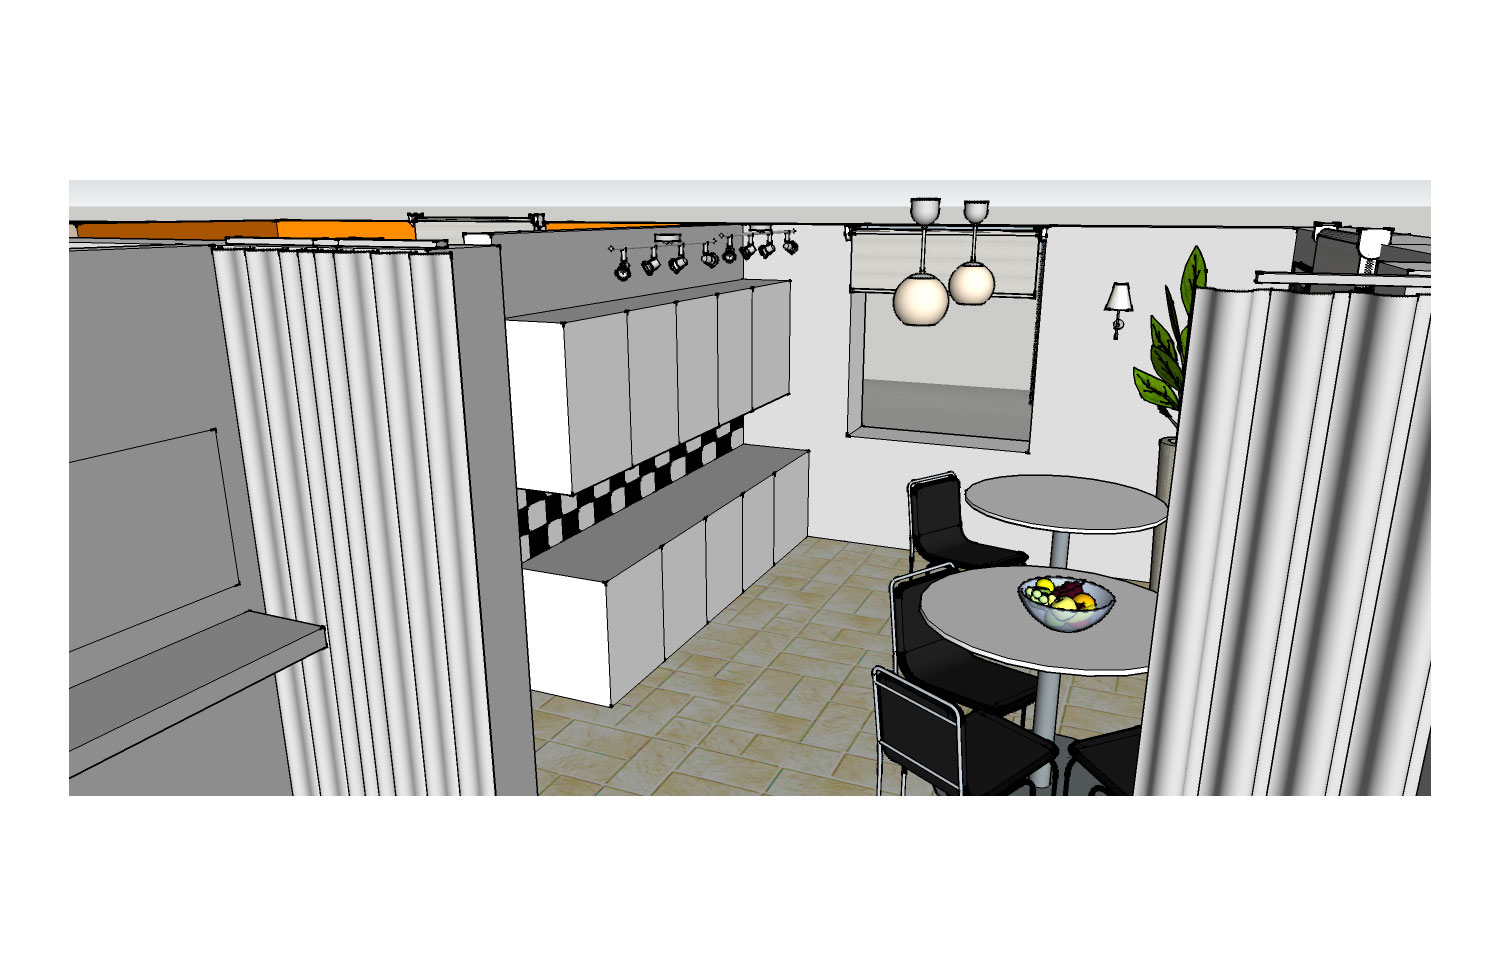 Vår vision i 3D av köket